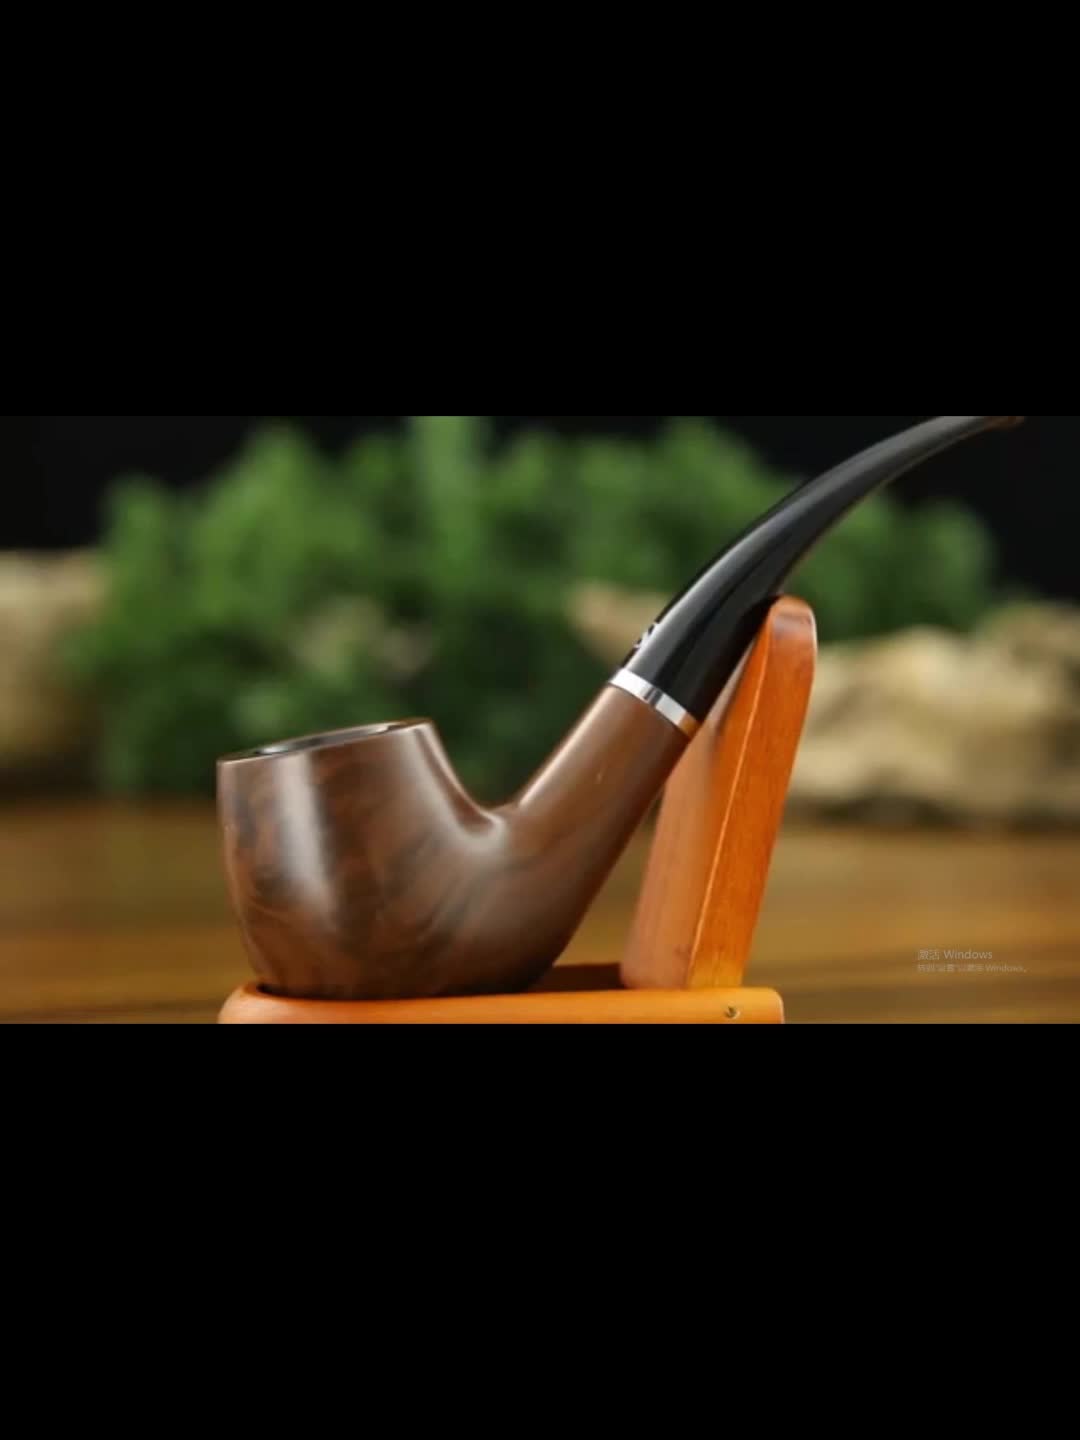  Whitluck's Tobacco Pipe, Handmade Wood Smoking Pipe